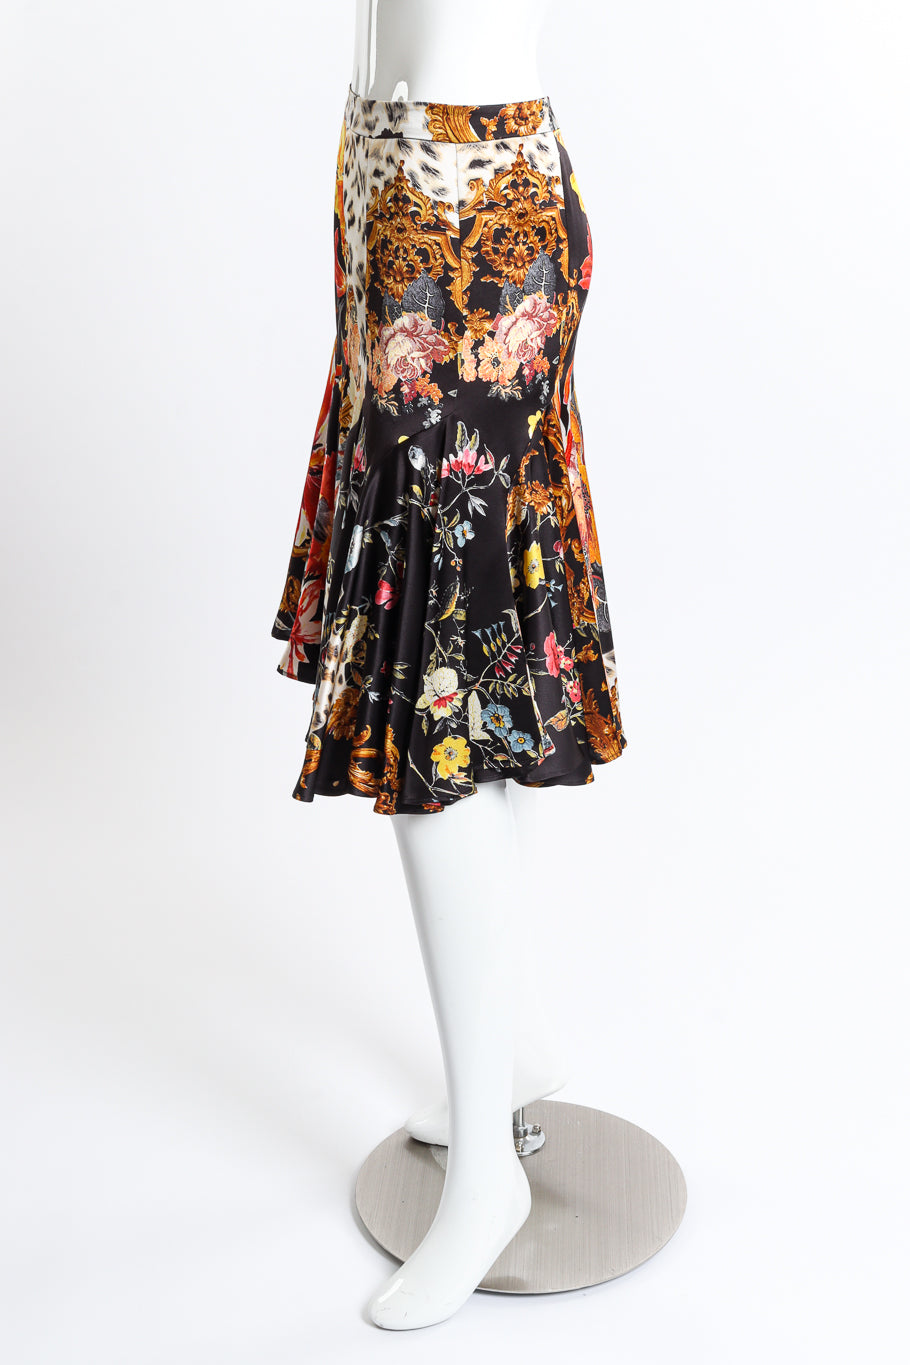 Vintage Roberto Cavalli Floral Leopard Ruffle Skirt side on mannequin @recess la